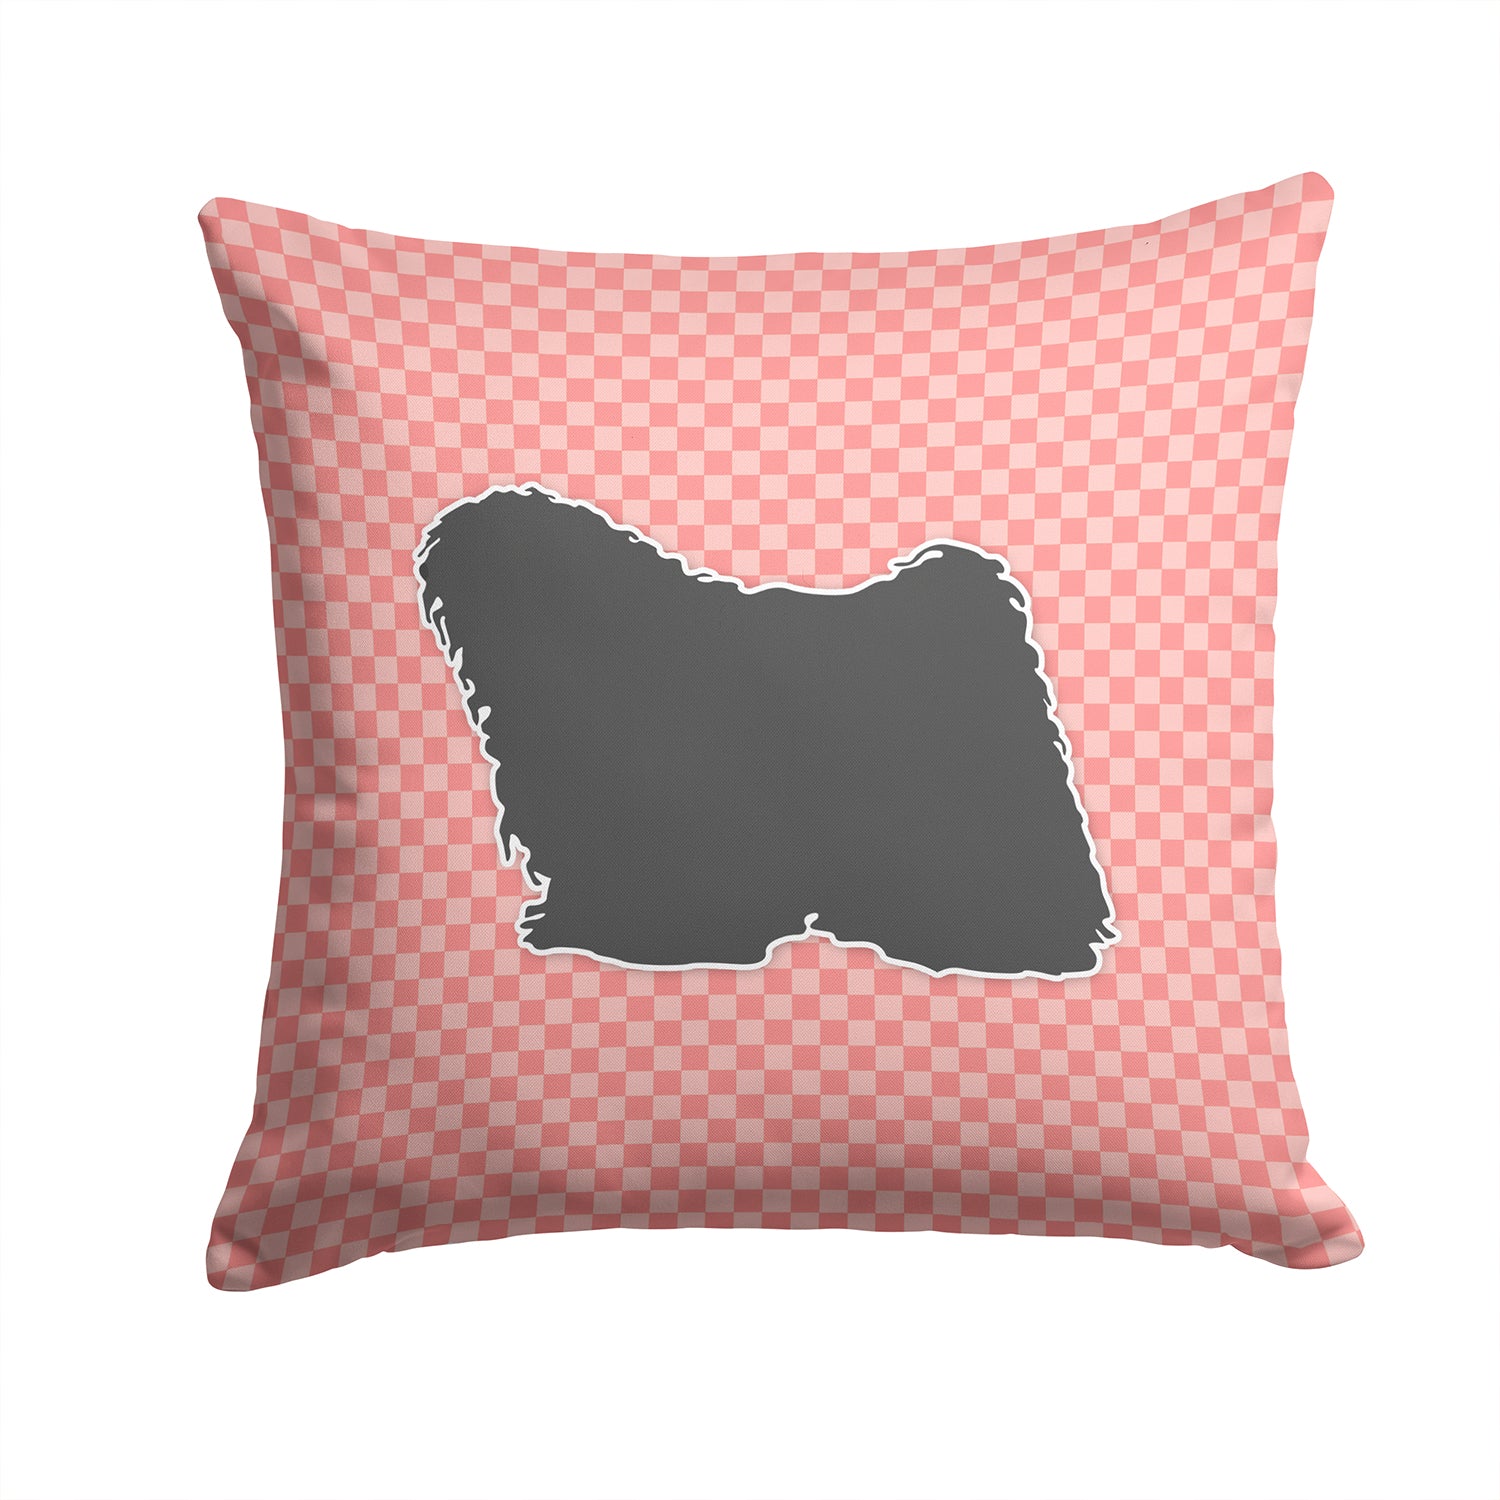 Puli Checkerboard Pink Fabric Decorative Pillow BB3663PW1414 - the-store.com